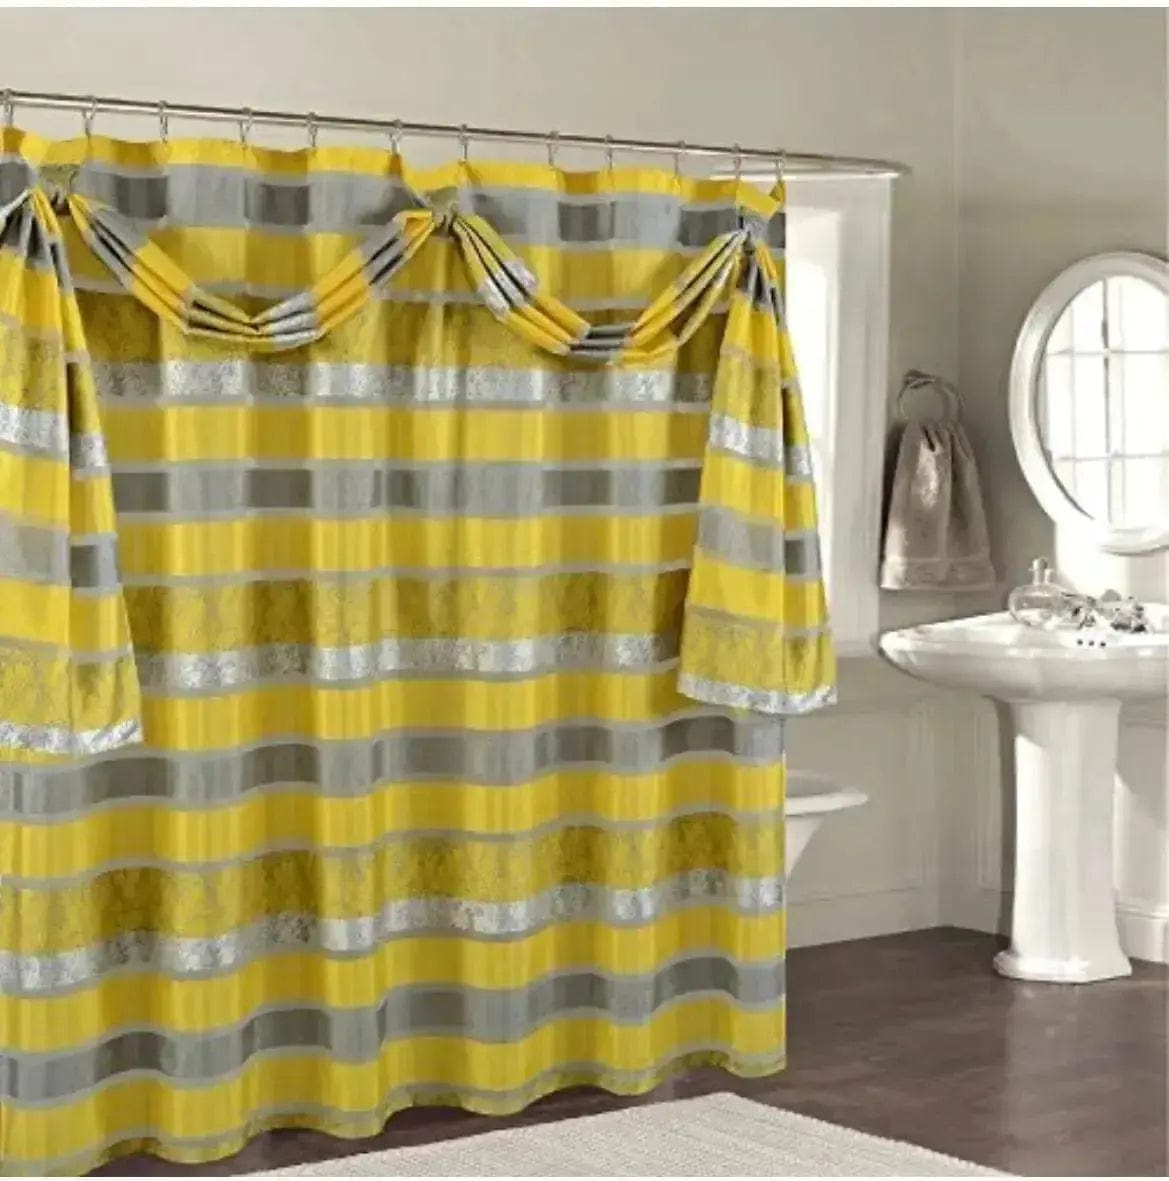 Linen World Venezia Yellow Shower Curtain with Scarf